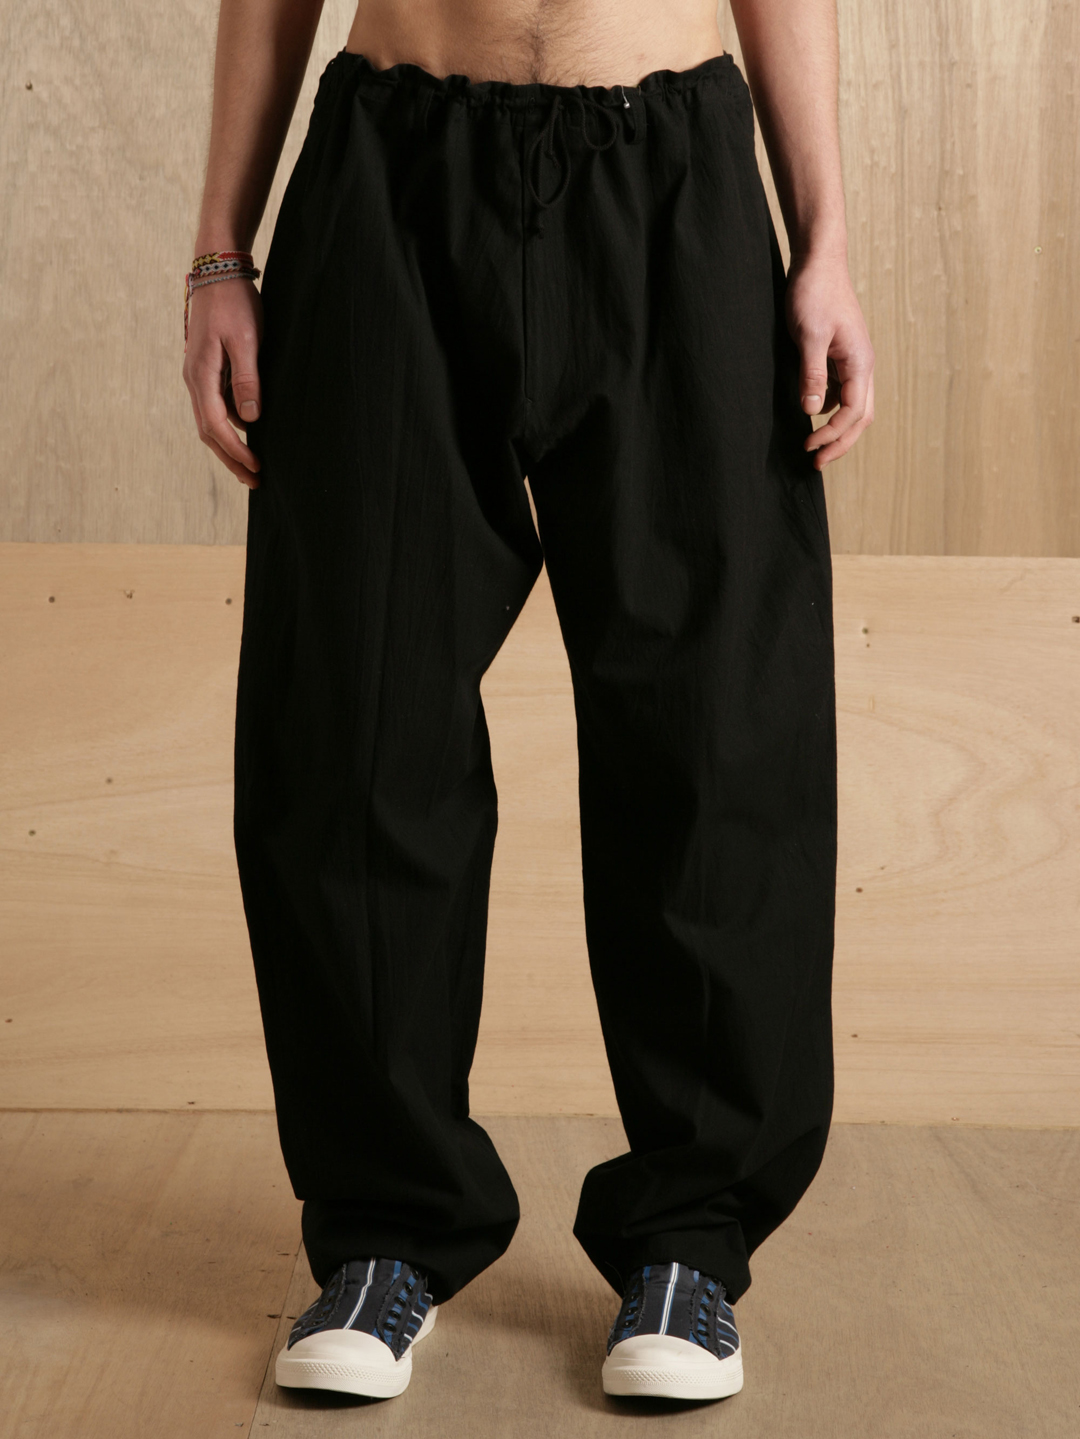 Yohji Yamamoto Yohji Yamamoto Mens Side Elastic String Pants in Black for  Men - Lyst